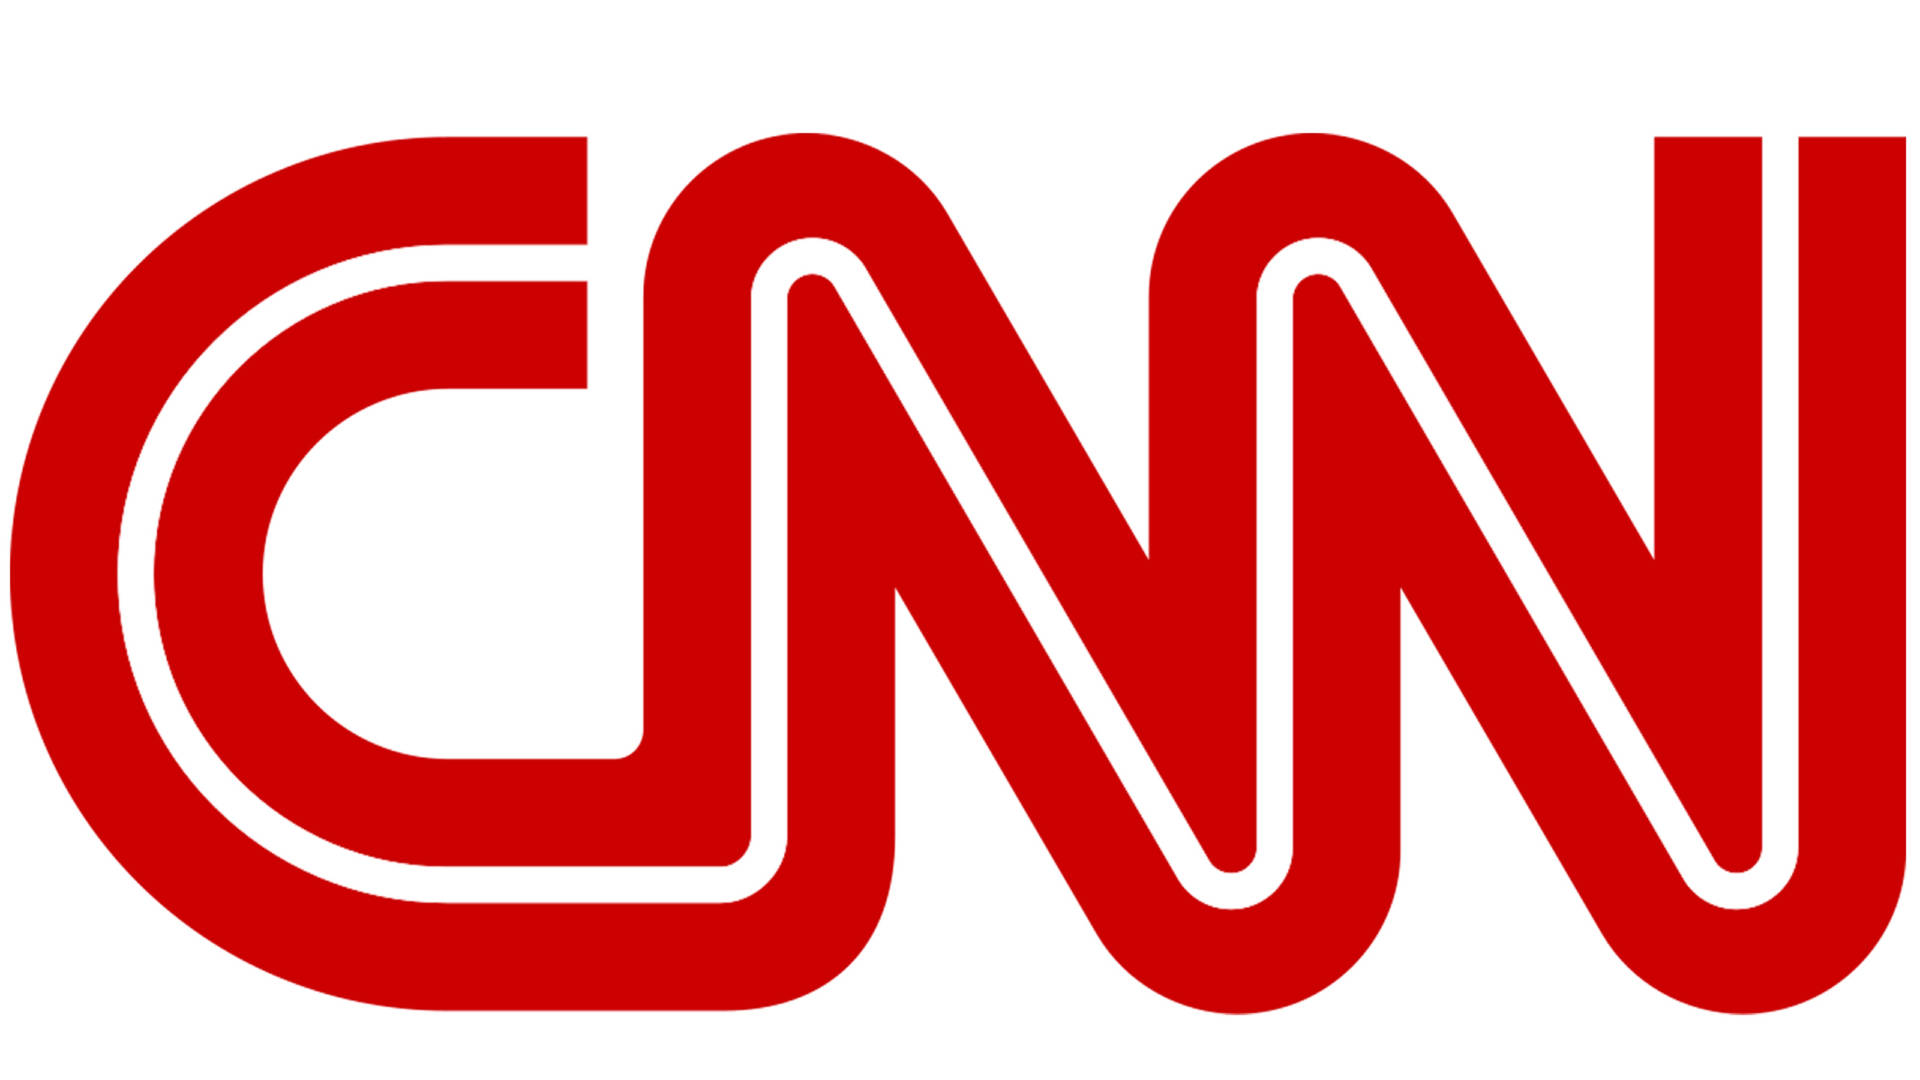 Cnn News Channel Logo Background